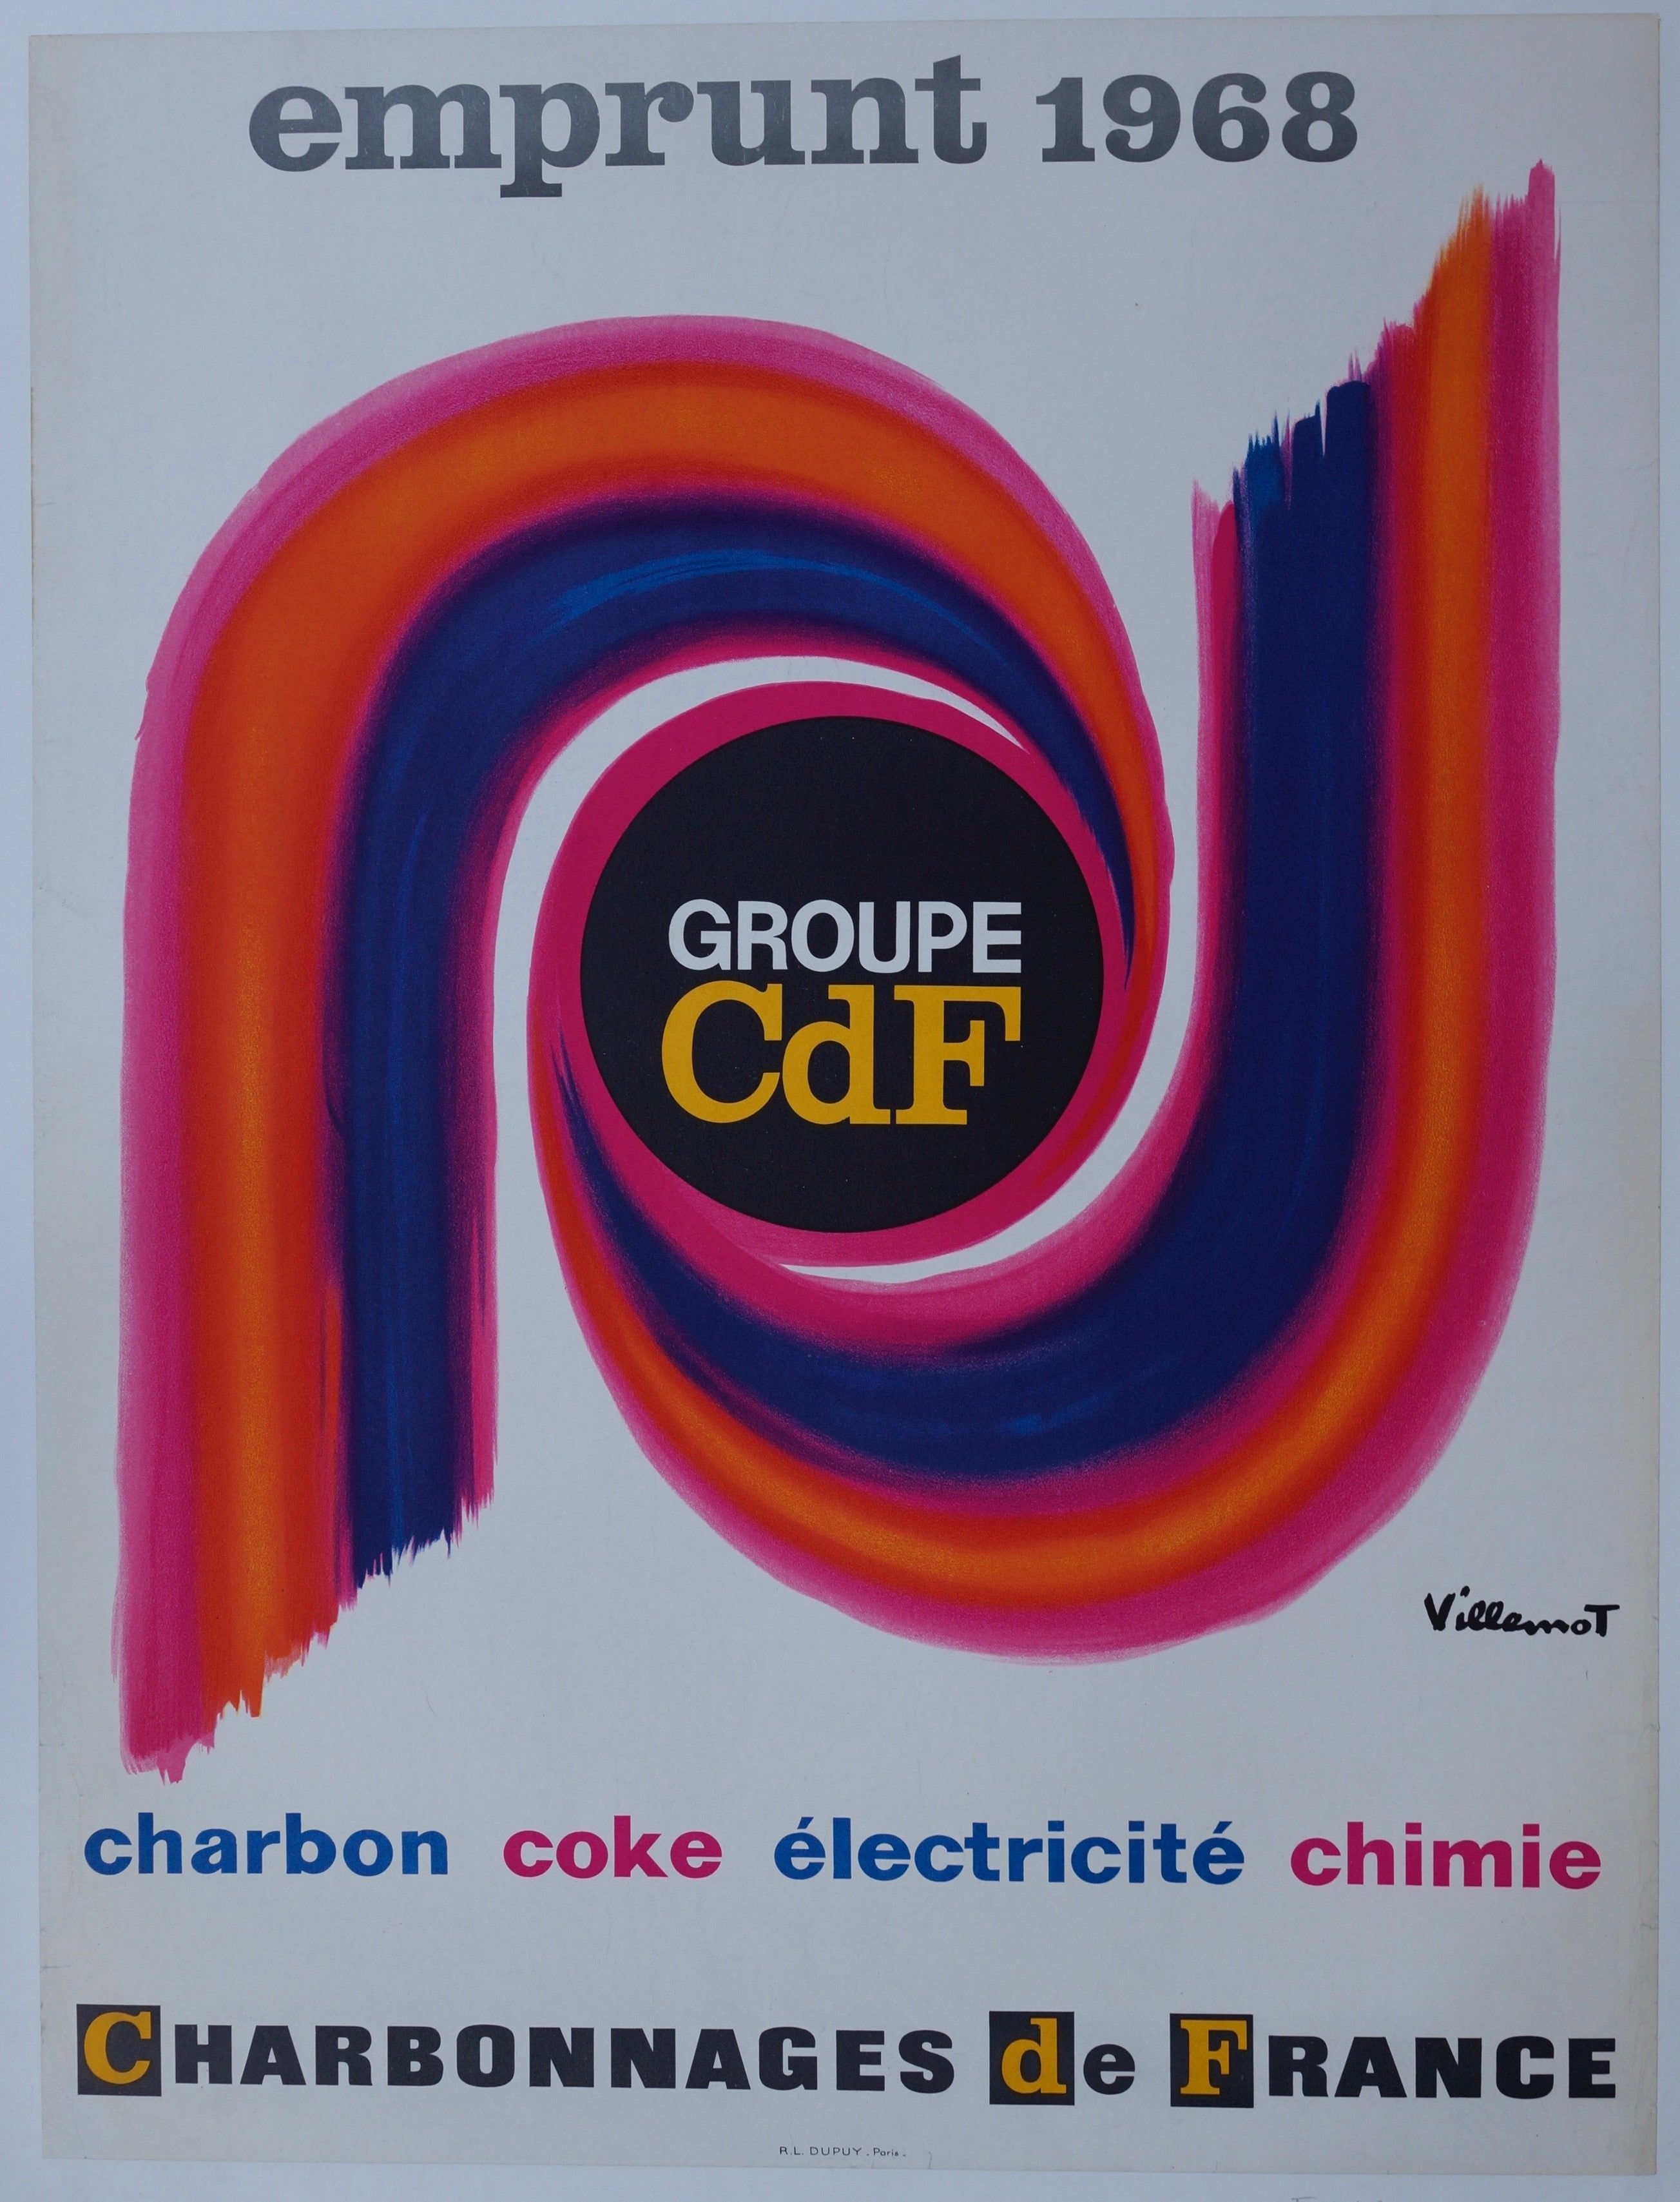 Emprunt 1966 - Groupe CdF